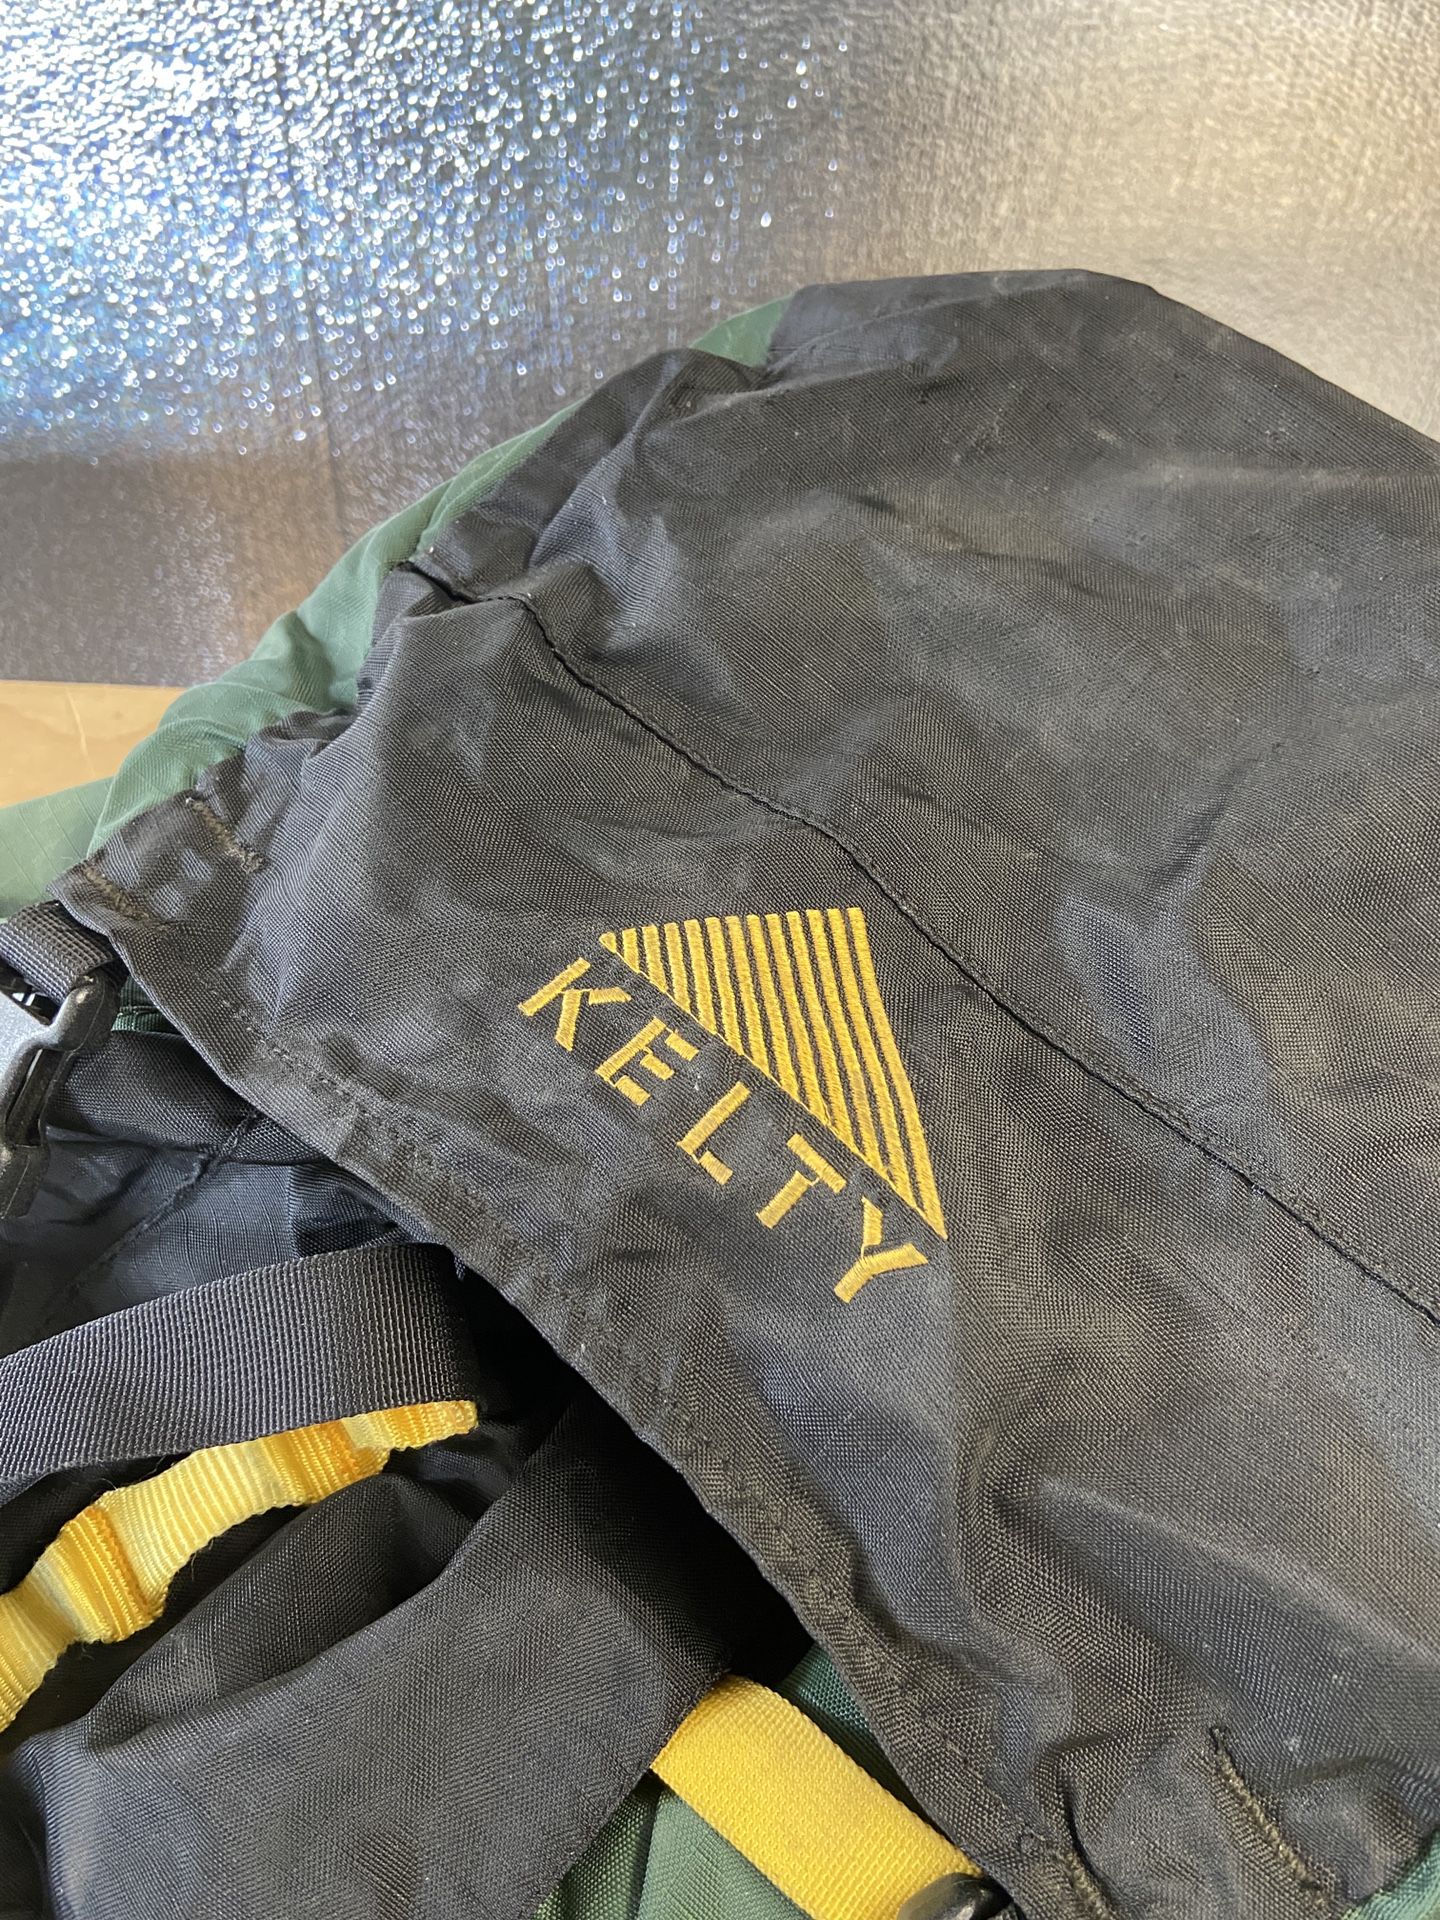 FREE! Kelty brand backpacking backpack / Hurricane model / large